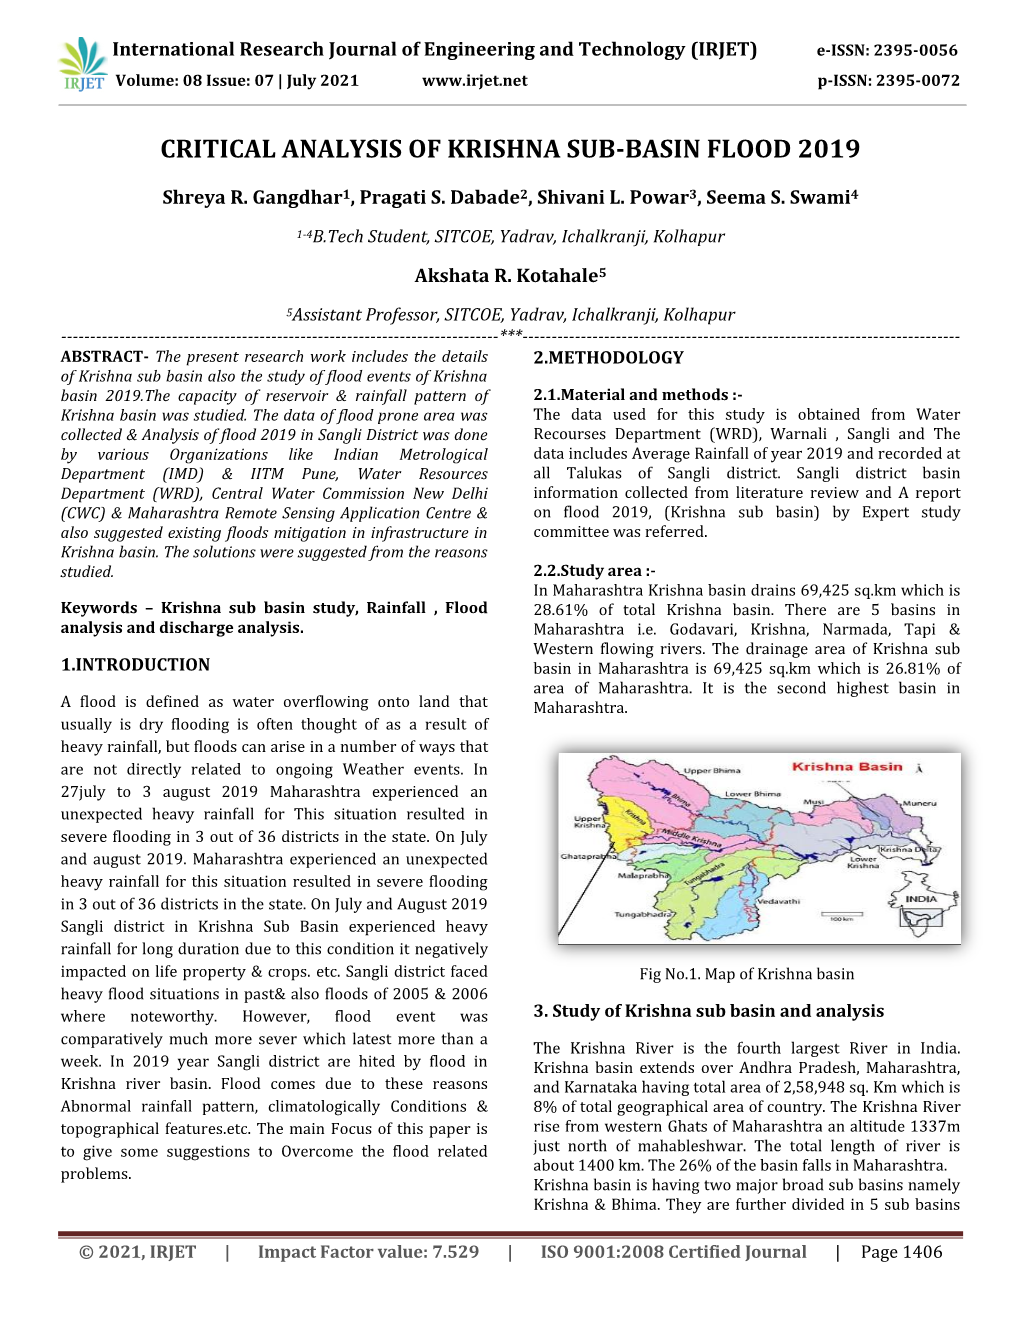 Critical Analysis of Krishna Sub-Basin Flood 2019